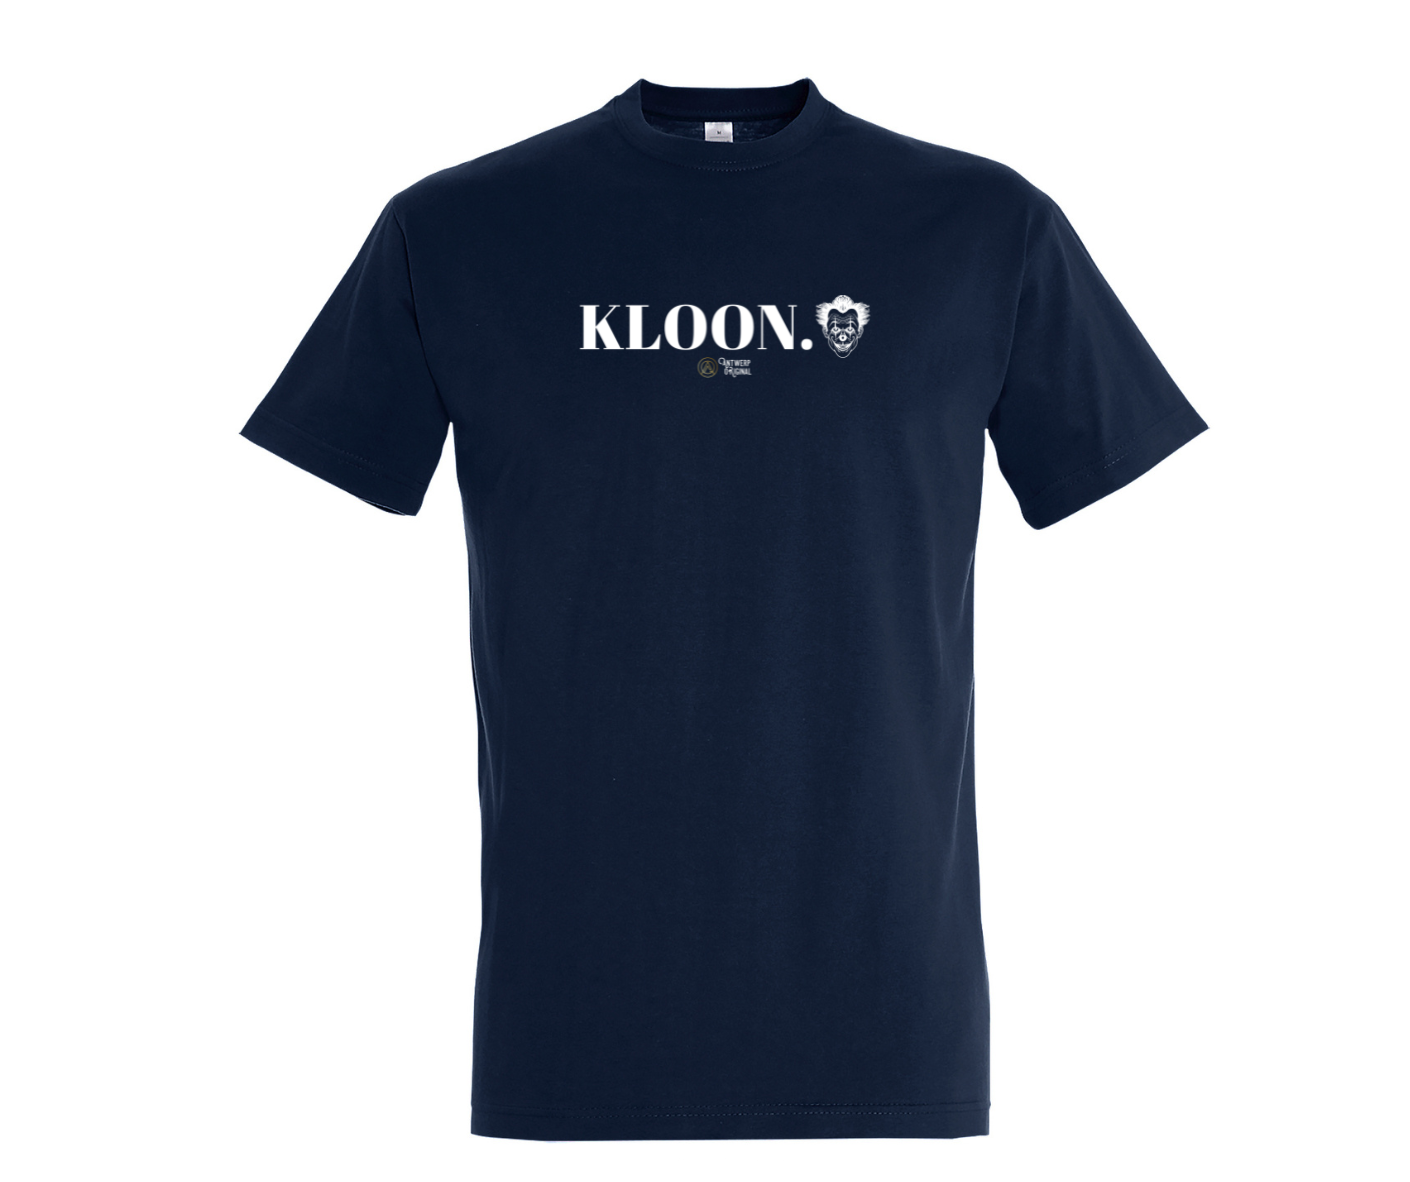 T shirt - Kloon.